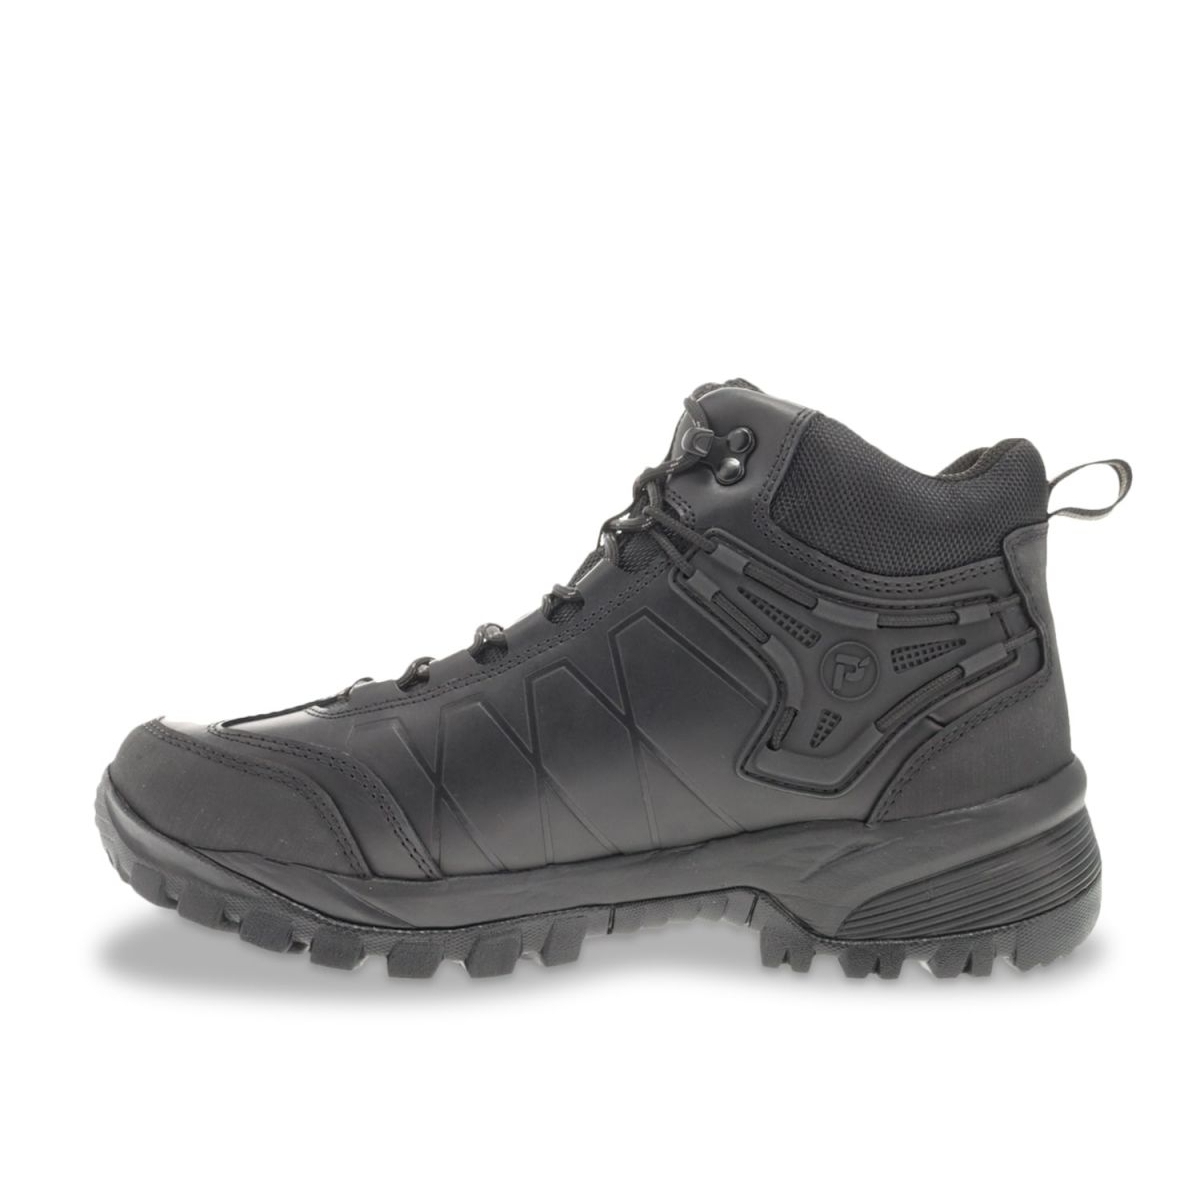 Propet Men's Ridge Walker Force Hiking Boots Black - MBA052LBLK BLACK - BLACK, 10.5 Wide